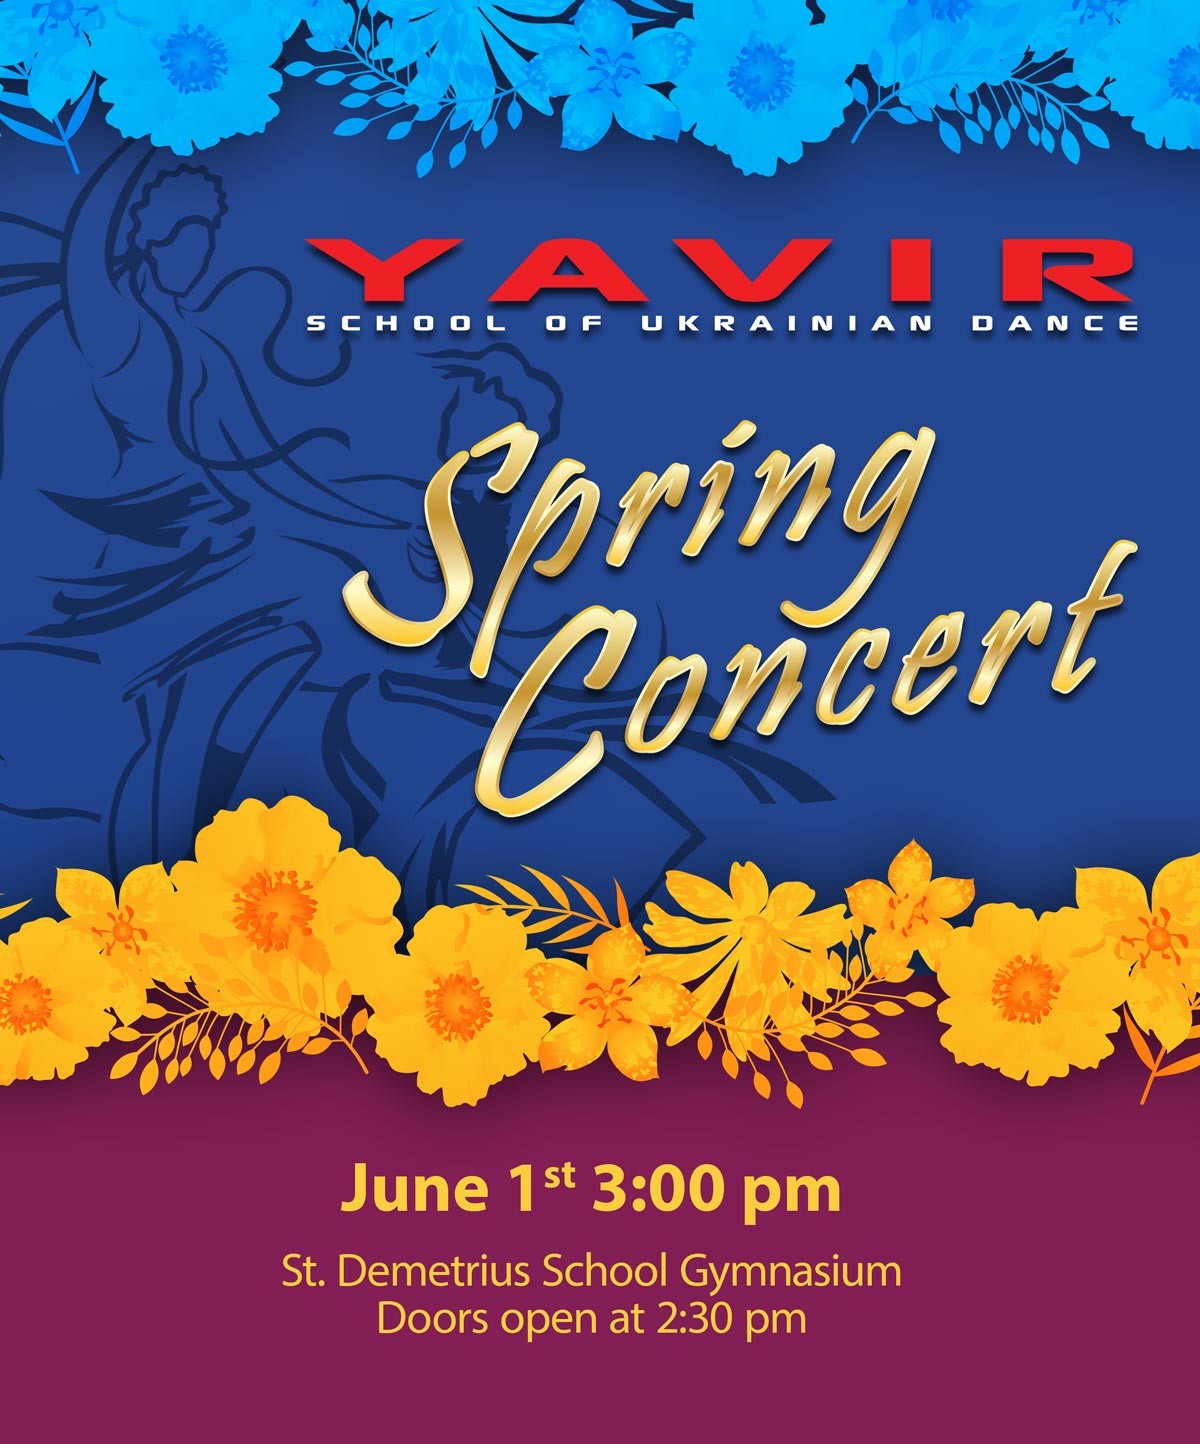 Yavir Spring Concert